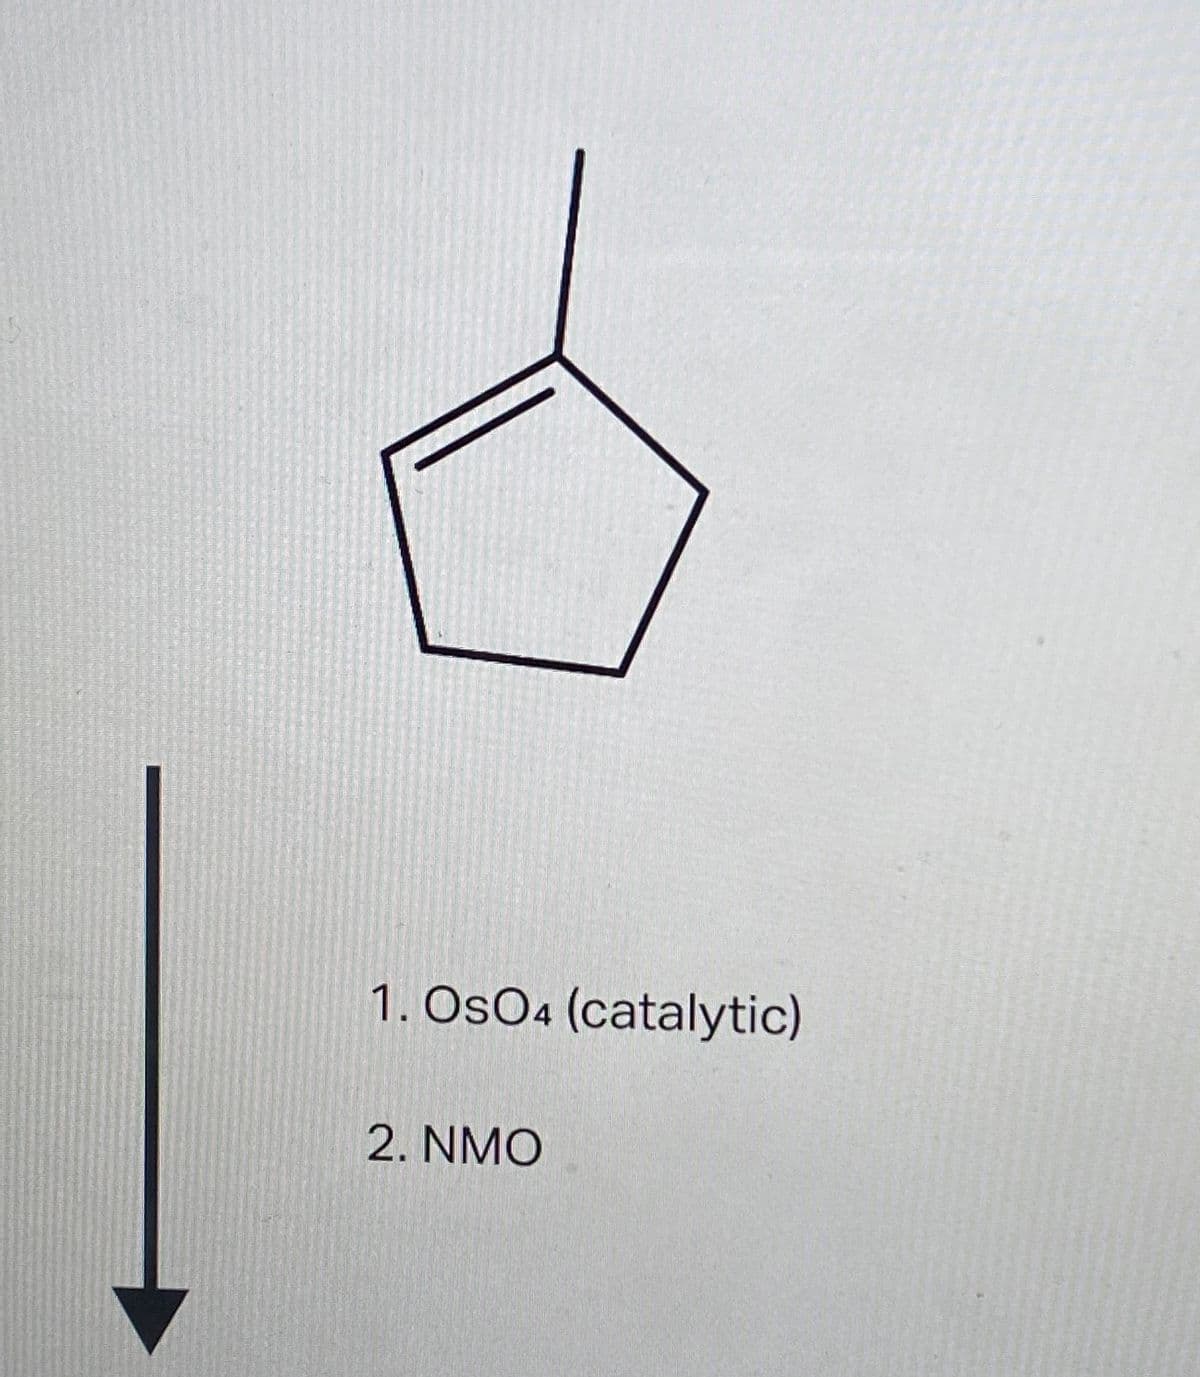 1. OsO4 (catalytic)
2. NMO
